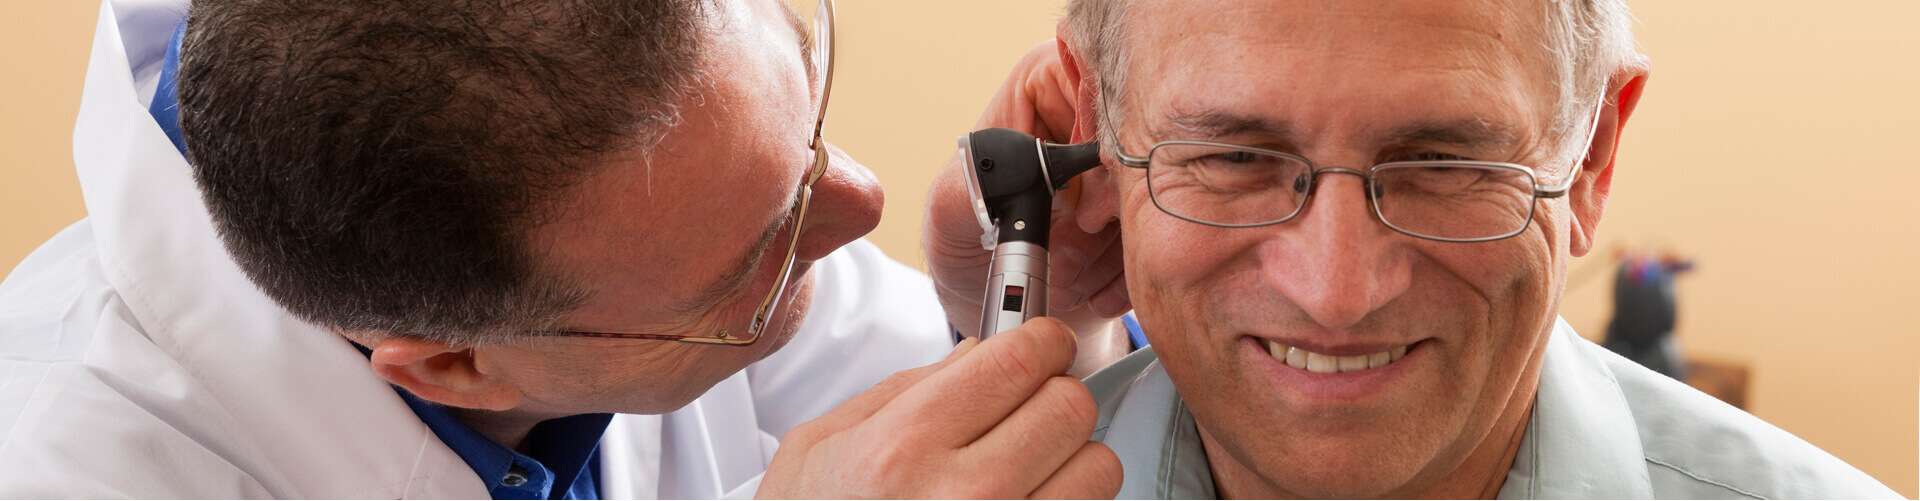 audiologists helps patient